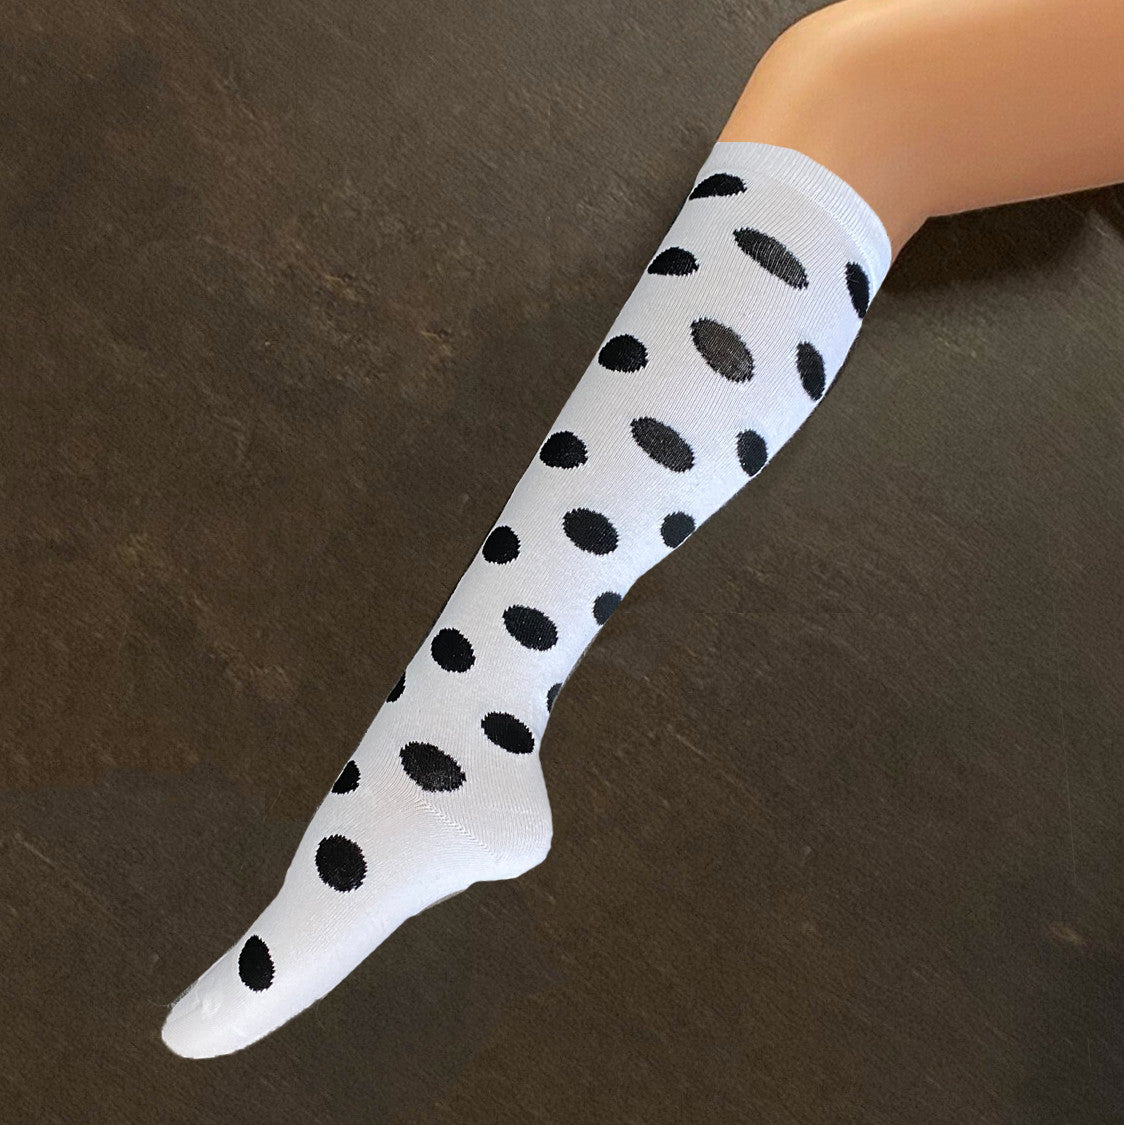 Socks - White with Black Polka Dots